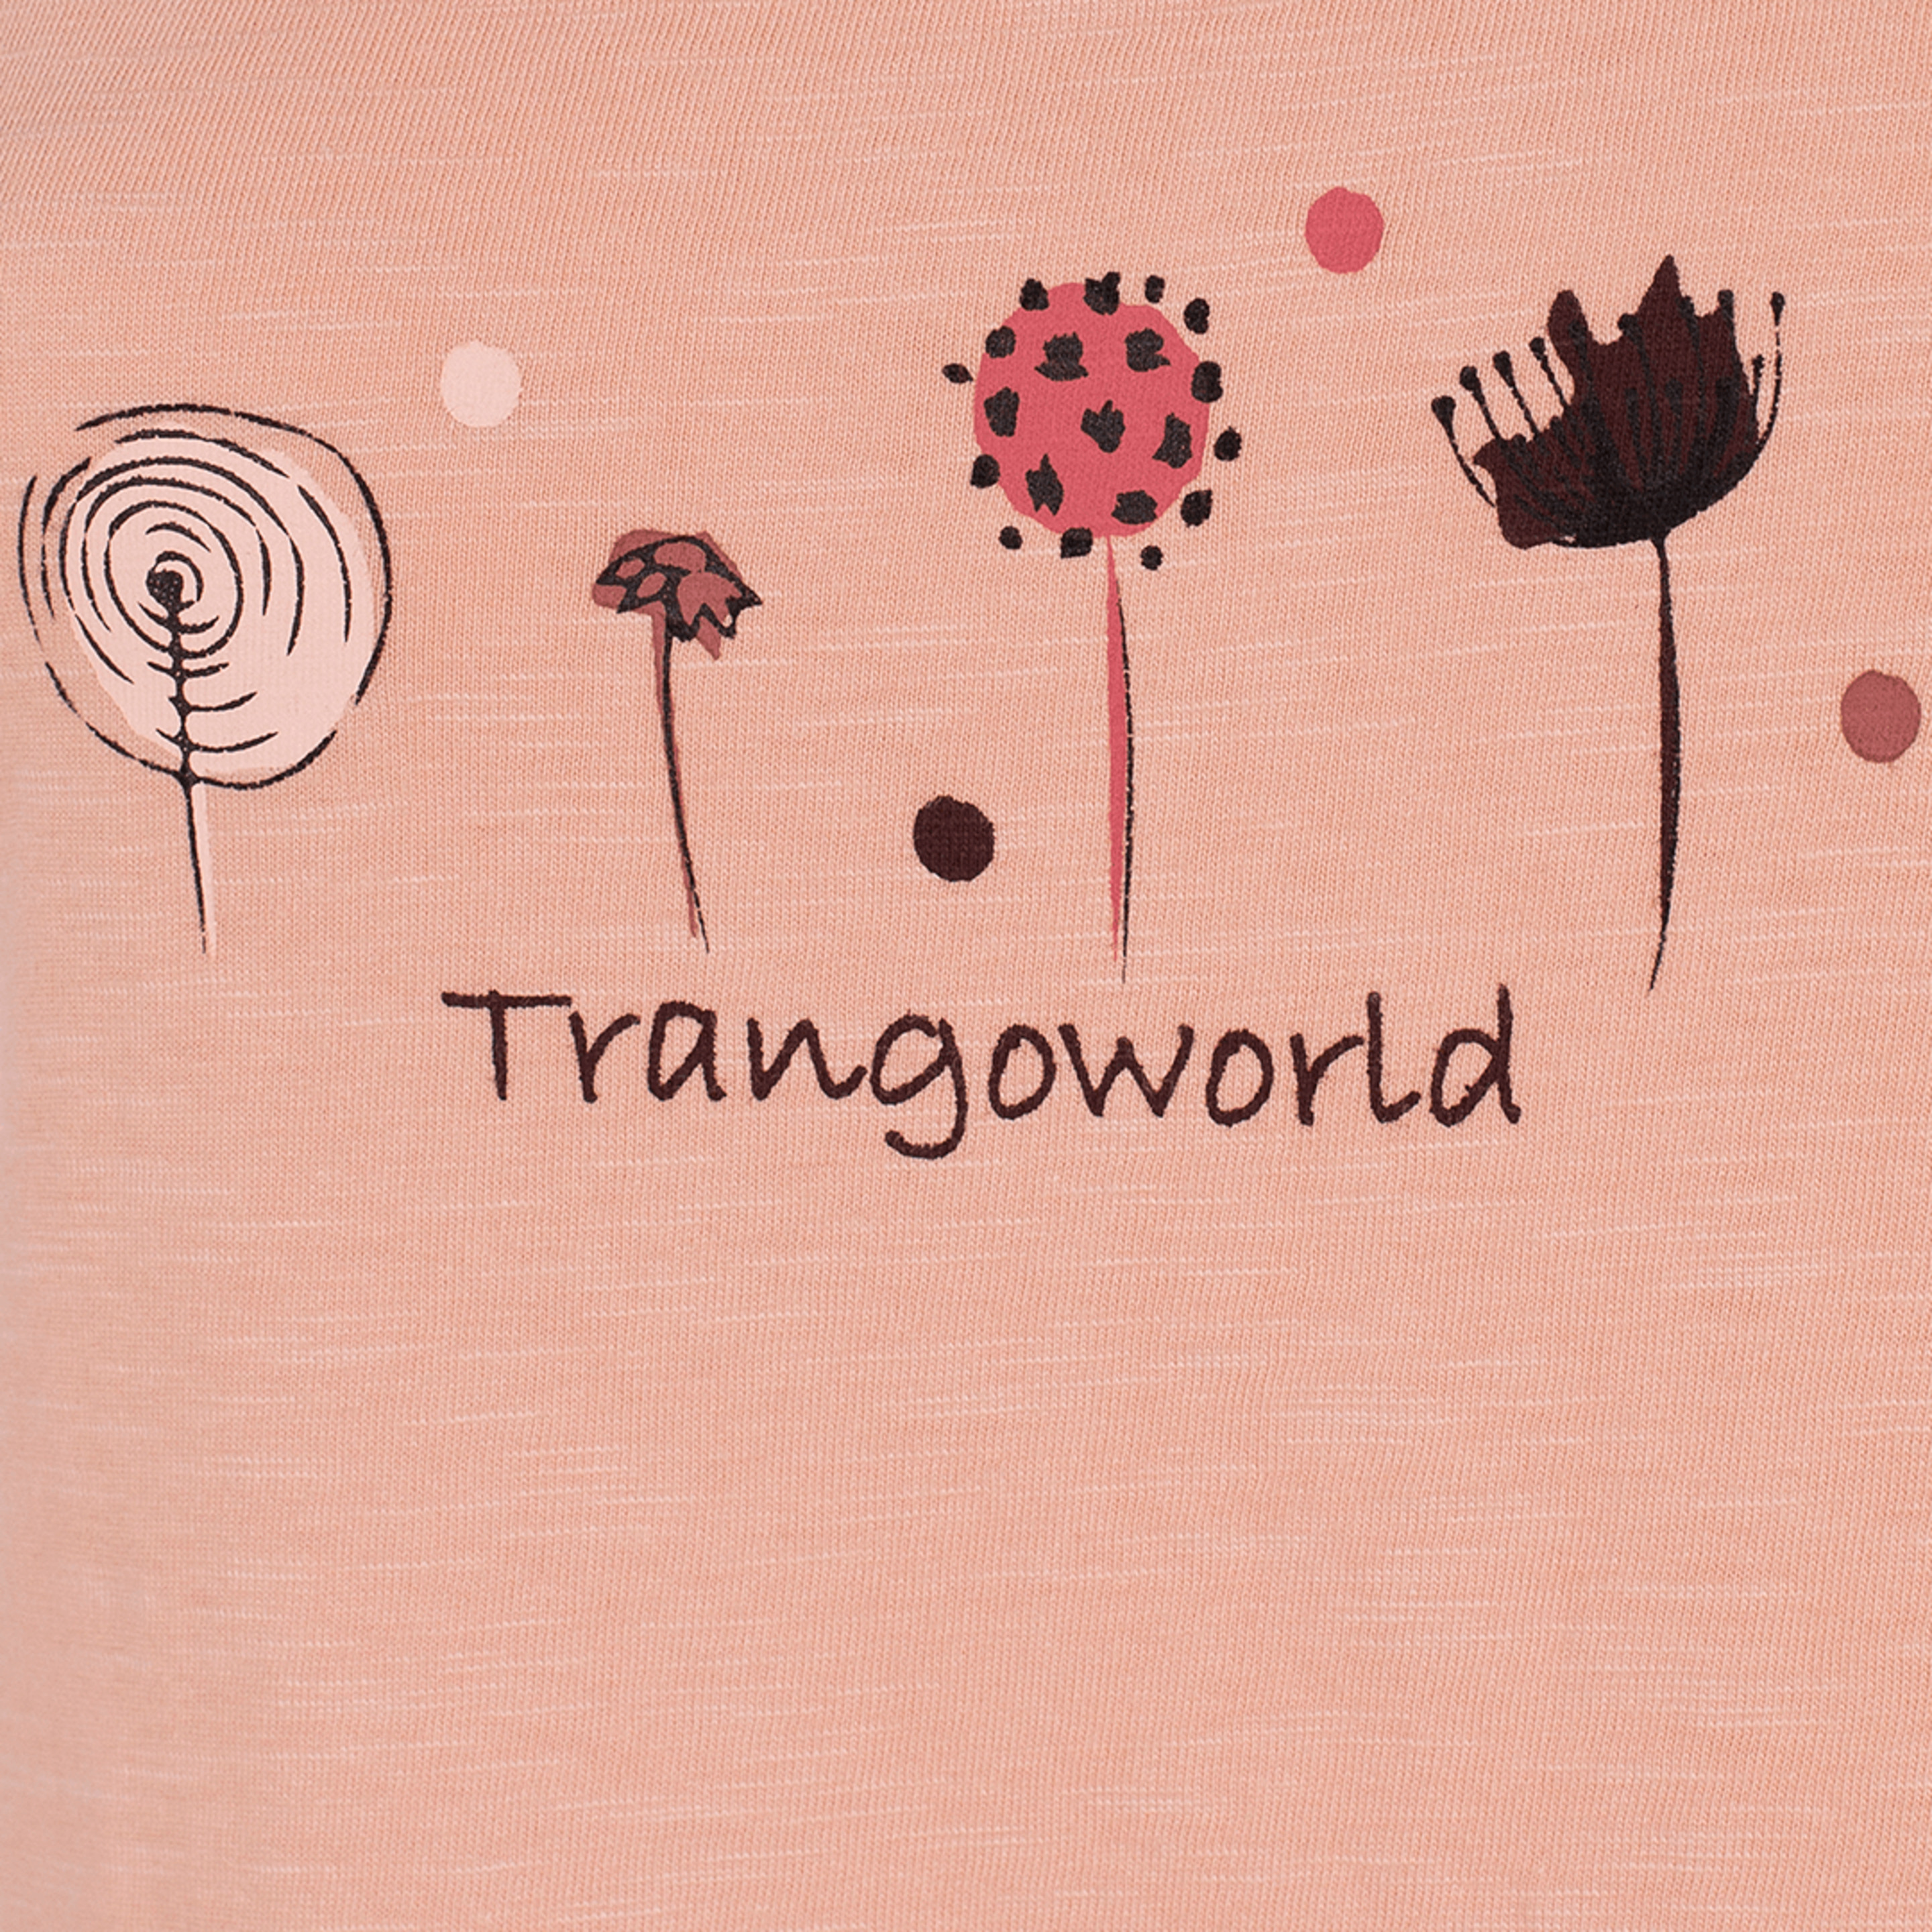 Camiseta Trangoworld Andarax